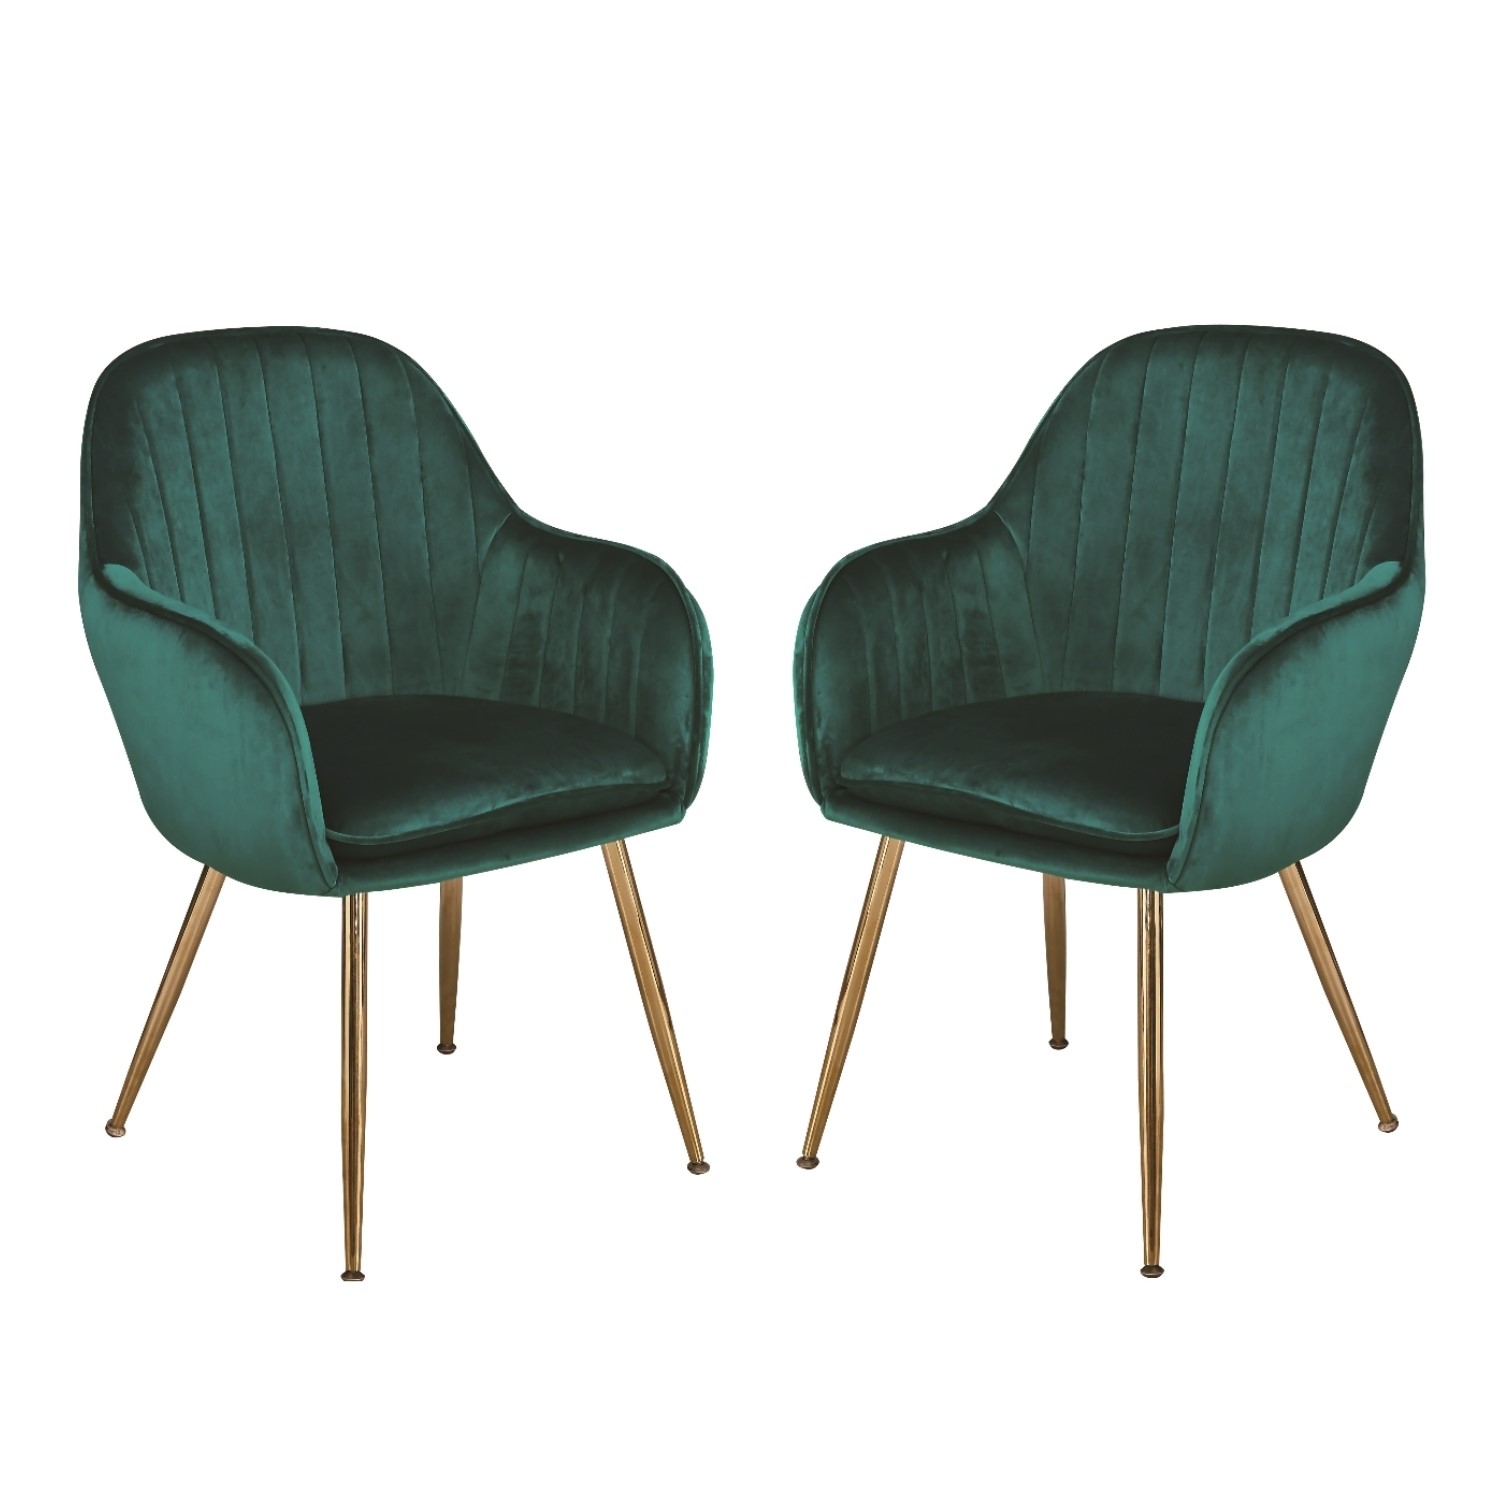 Photo of Set of 2 green velvet armchair dining chairs - lara